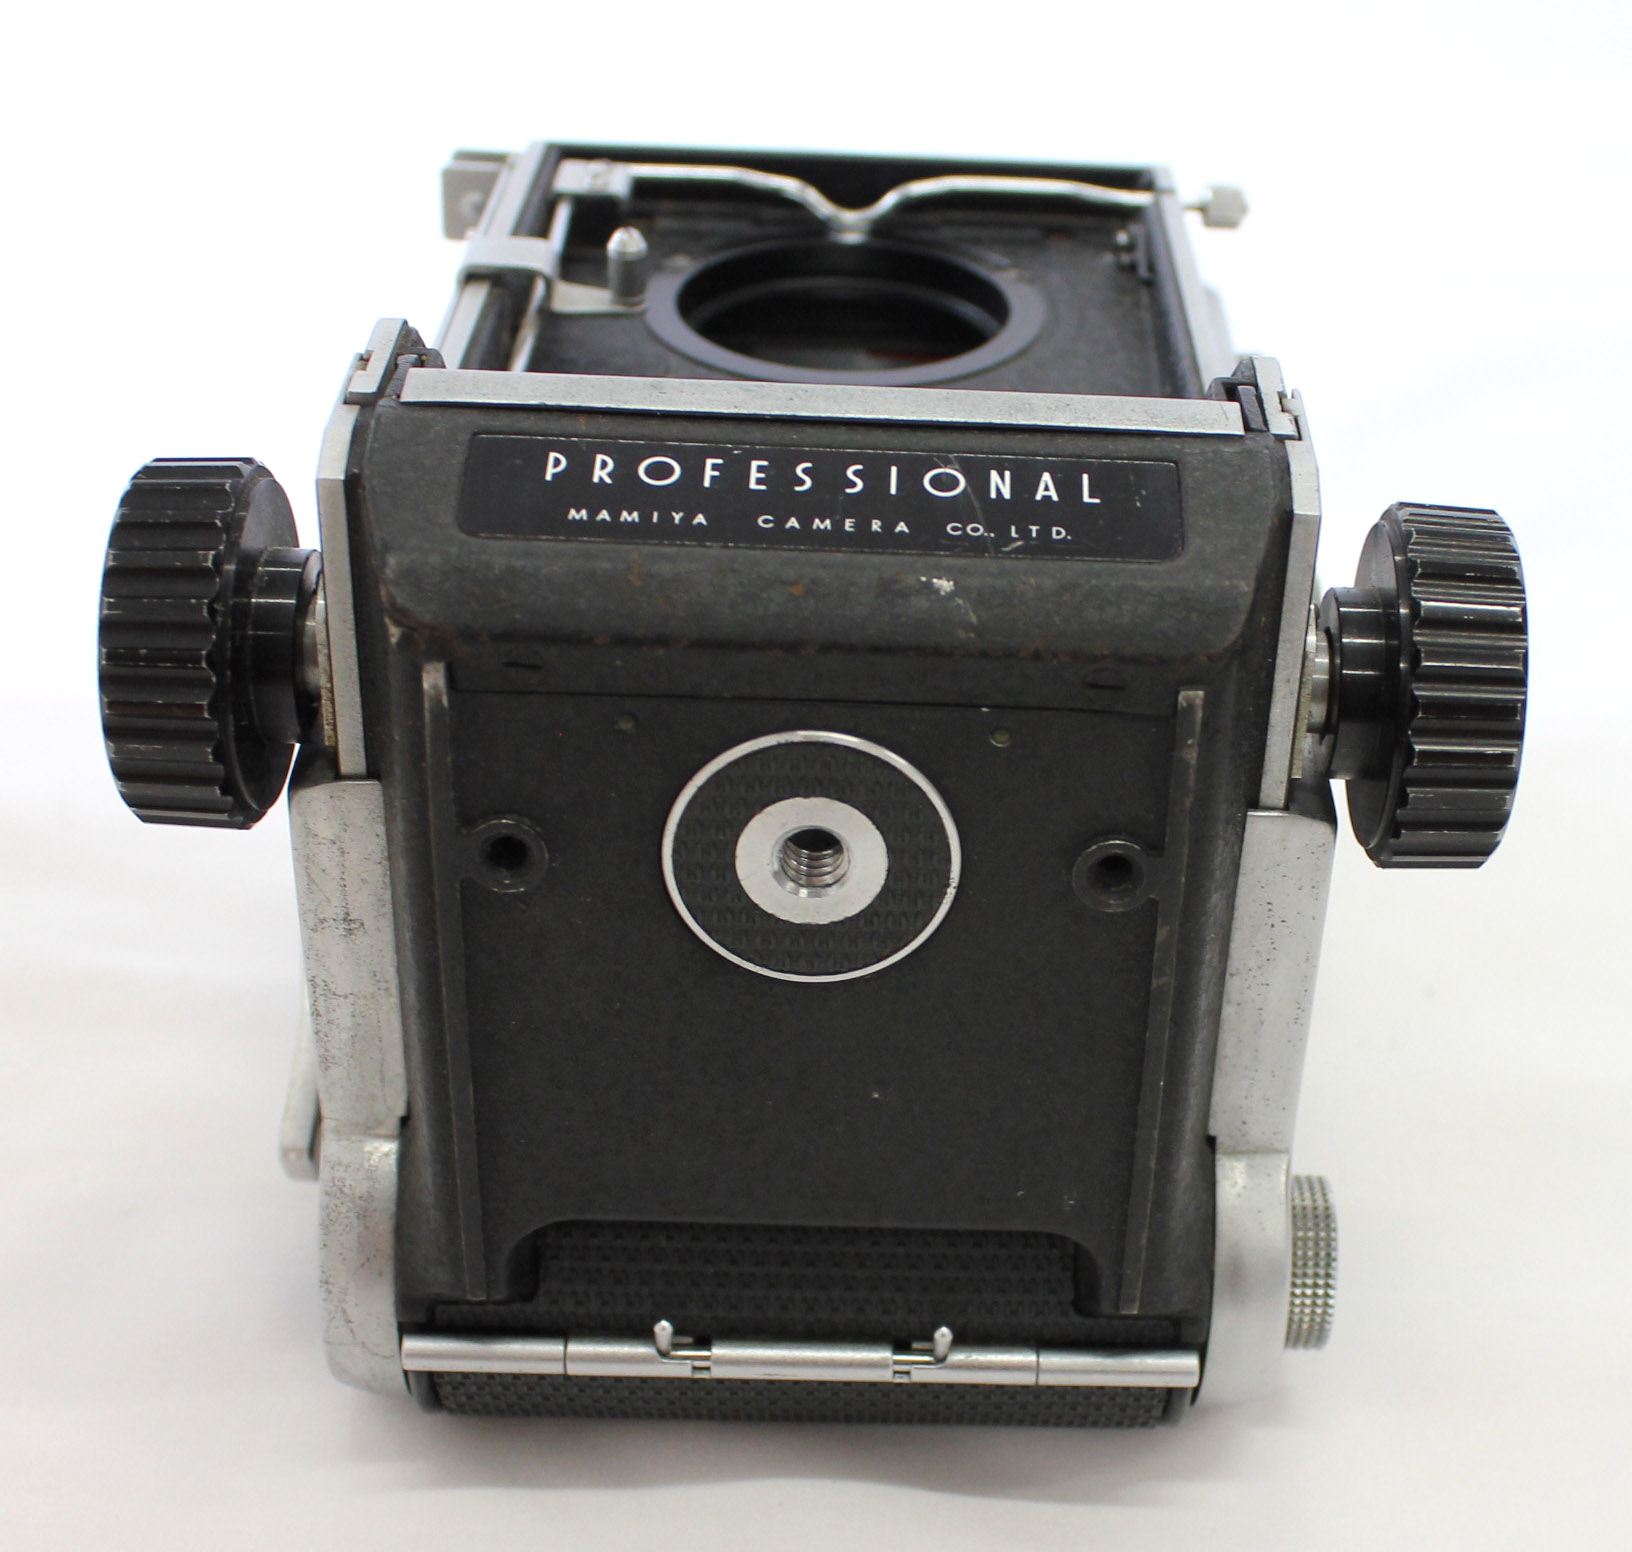  Mamiya C3 Professional Medium Format TLR Camera with 105mm F3.5 Lens from Japan Photo 7